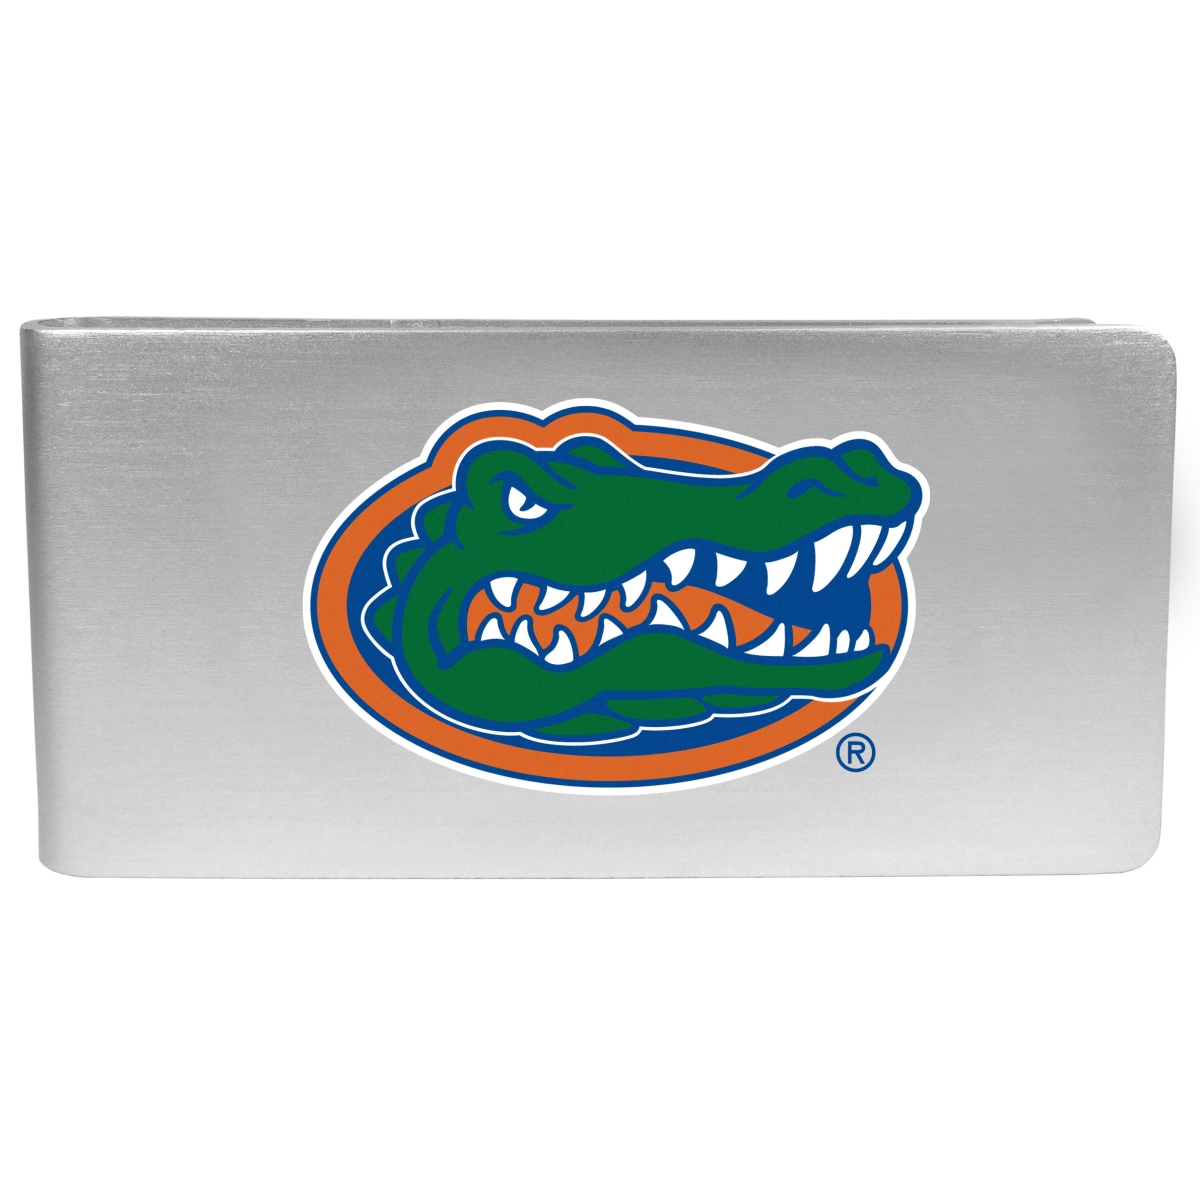 Picture of Siskiyou CBMP4 Unisex NCAA Florida Gators Logo Money Clip - One Size